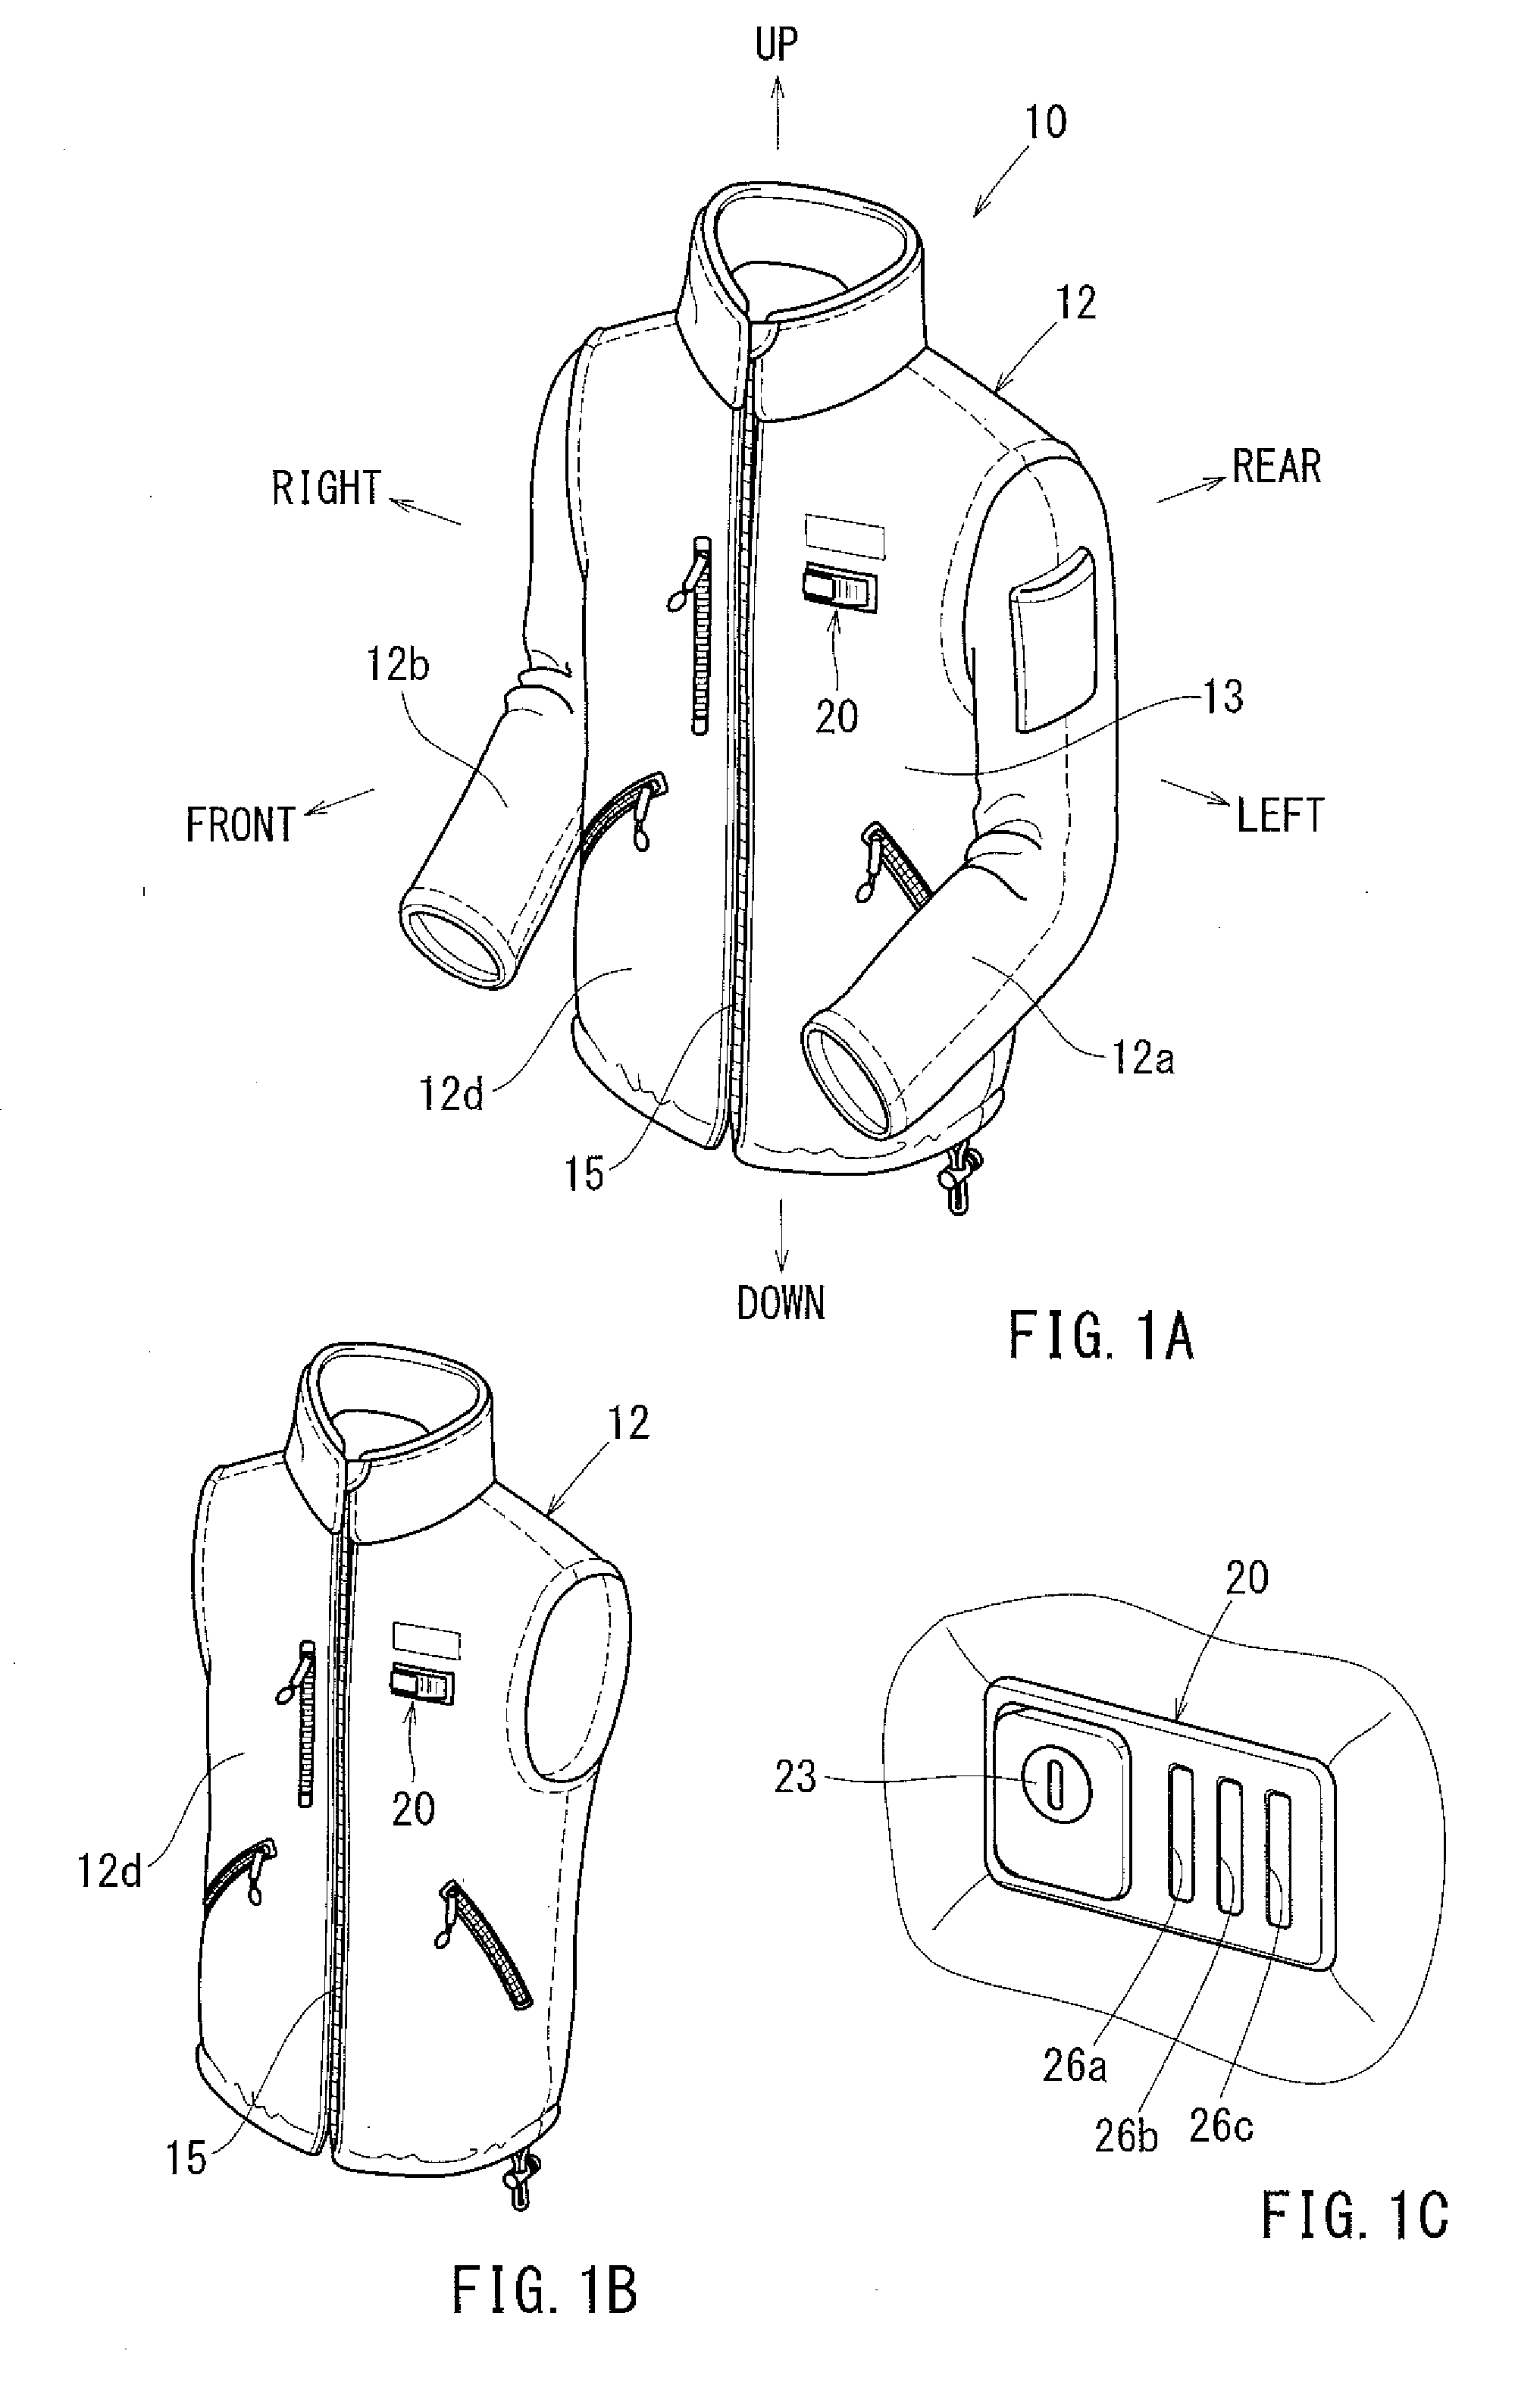 Heat-retaining jacket